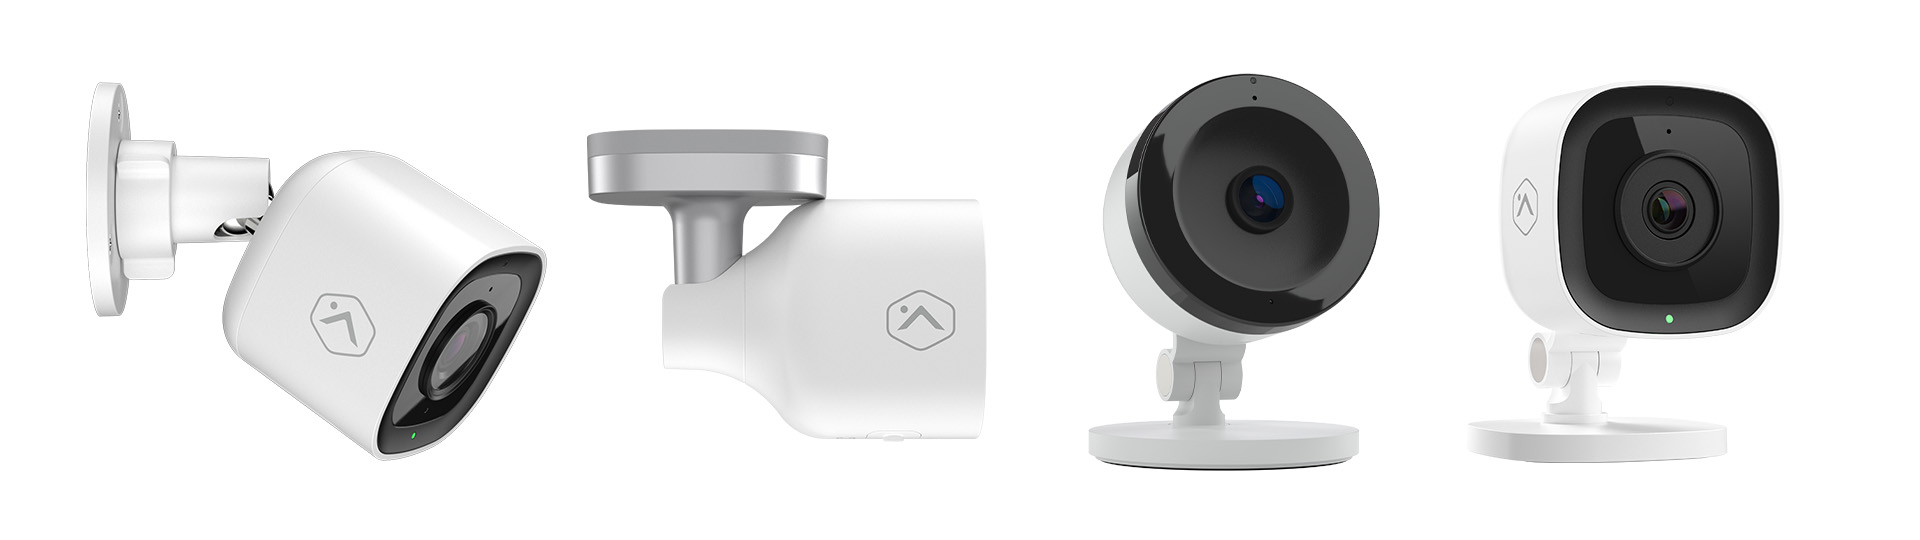 4 models of home security cameras by alarm.com